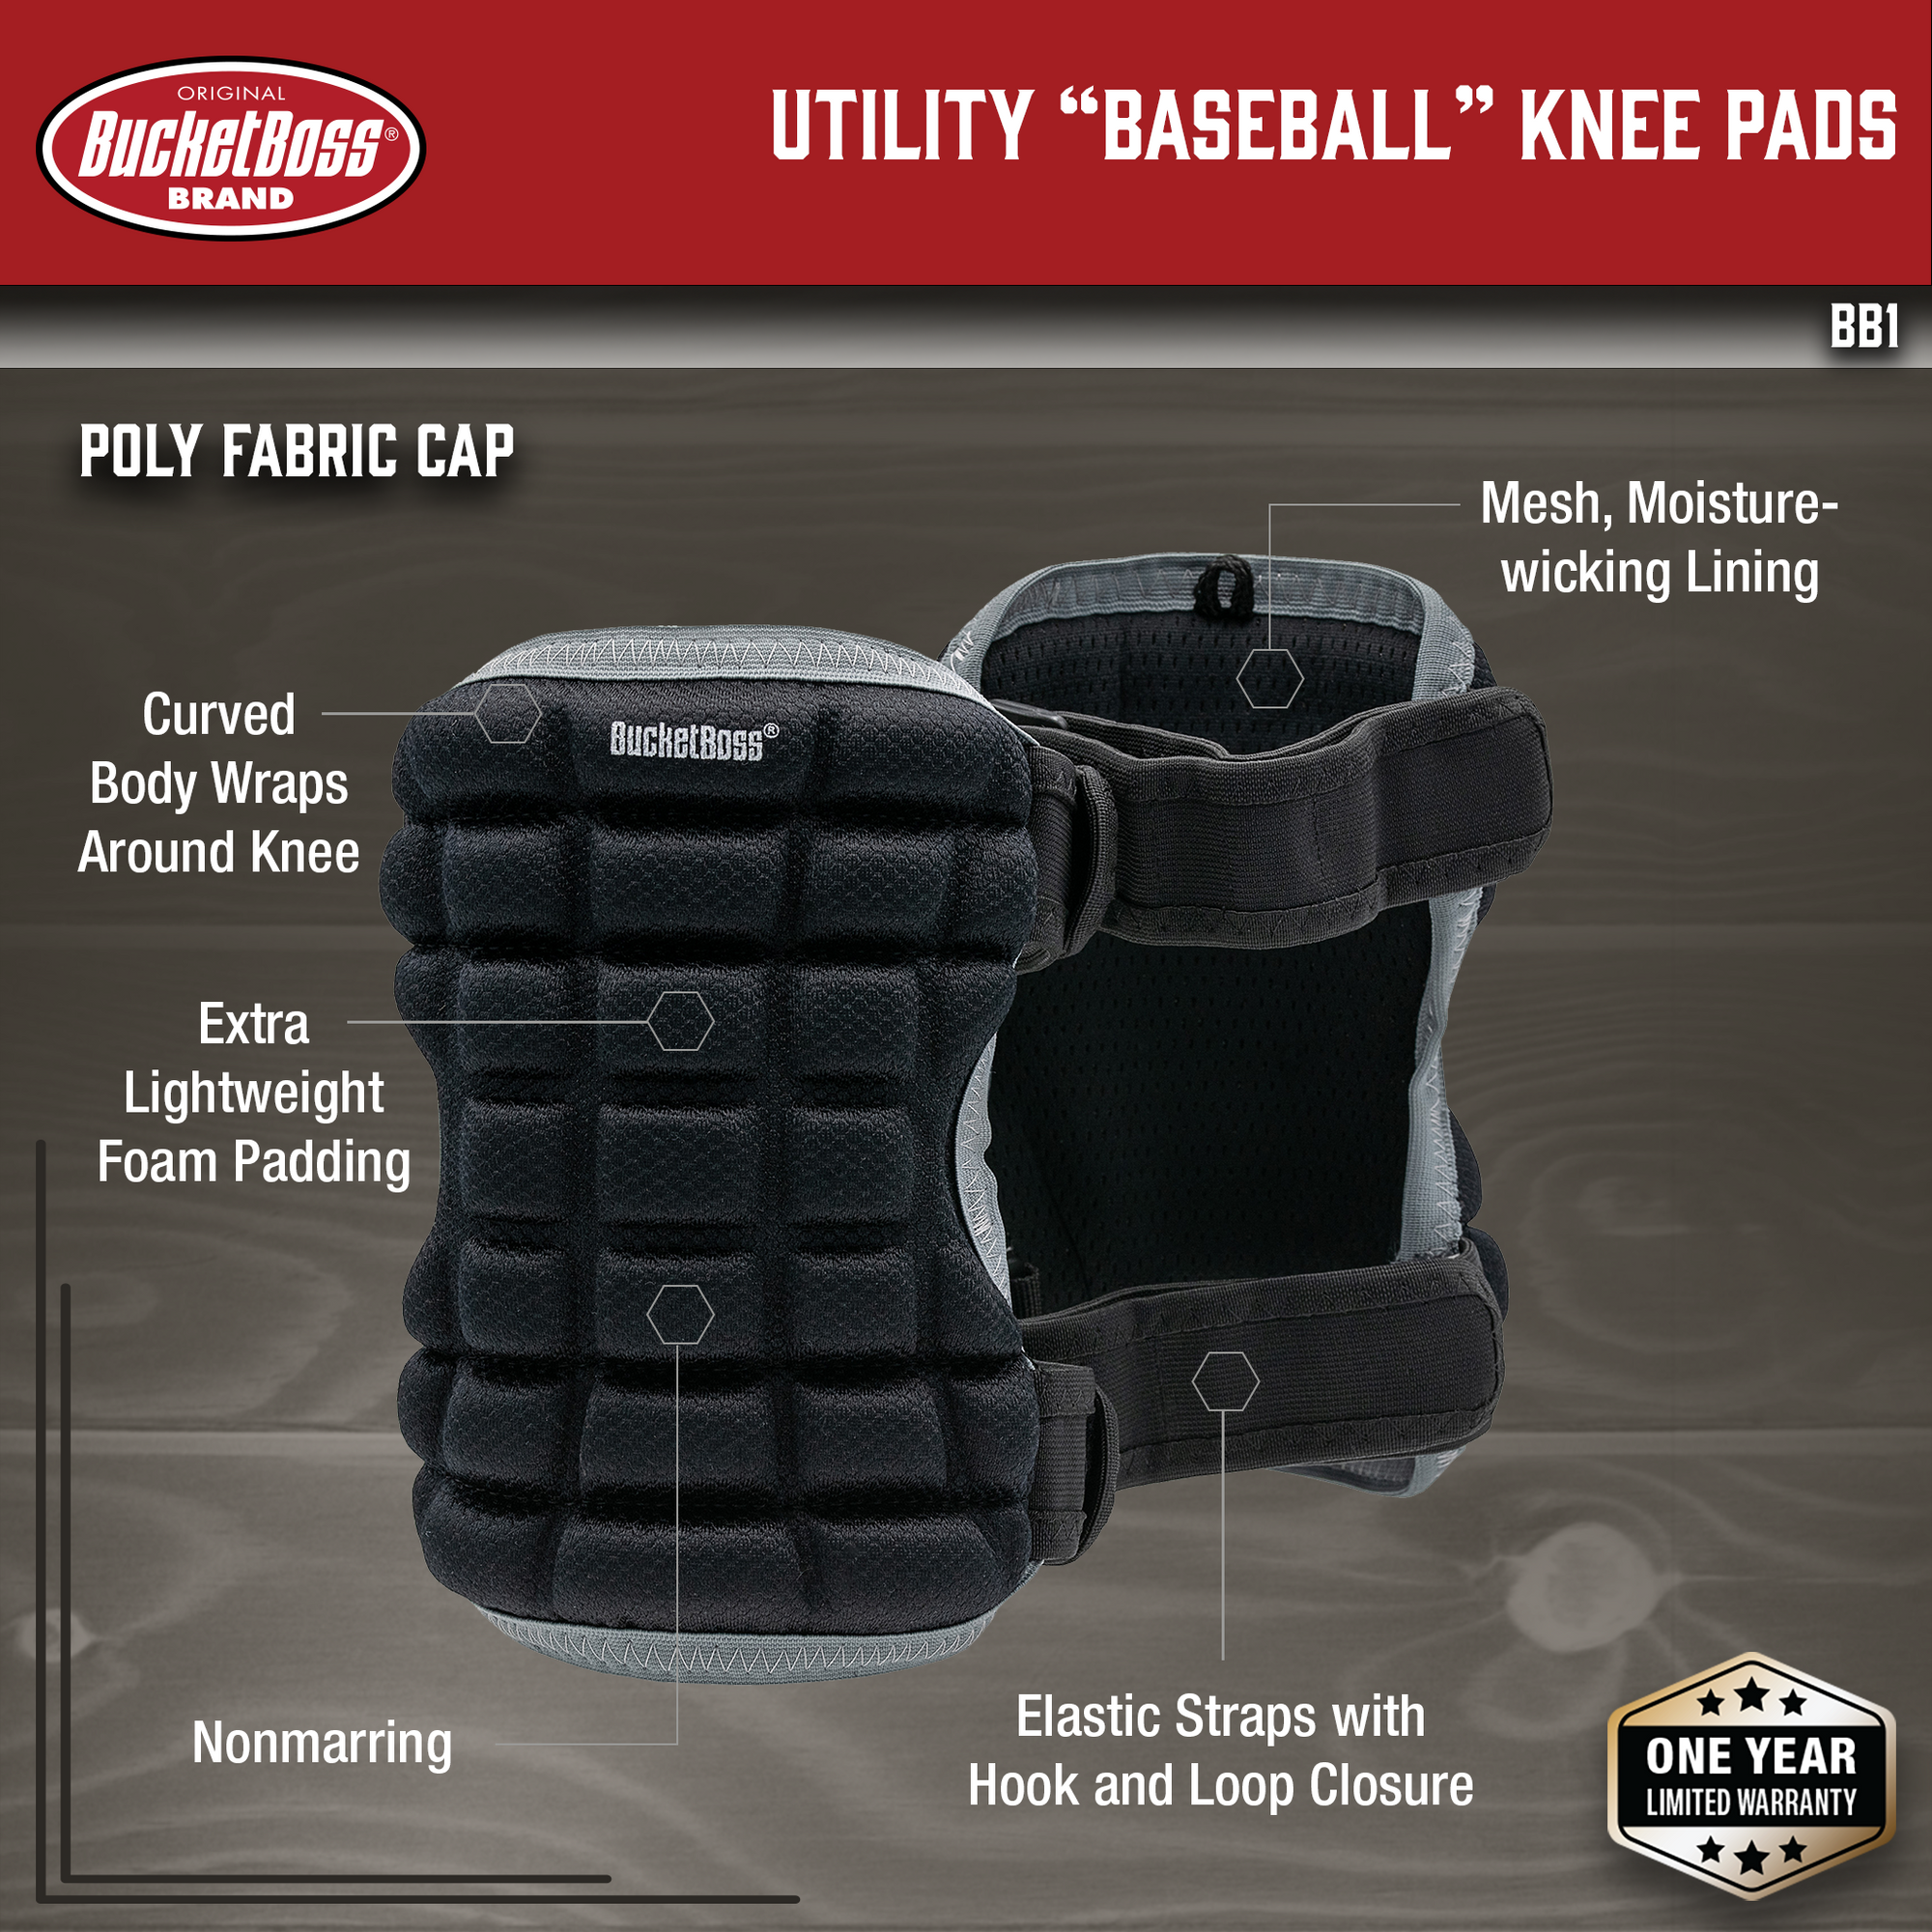 Utility "Baseball" Knee Pads